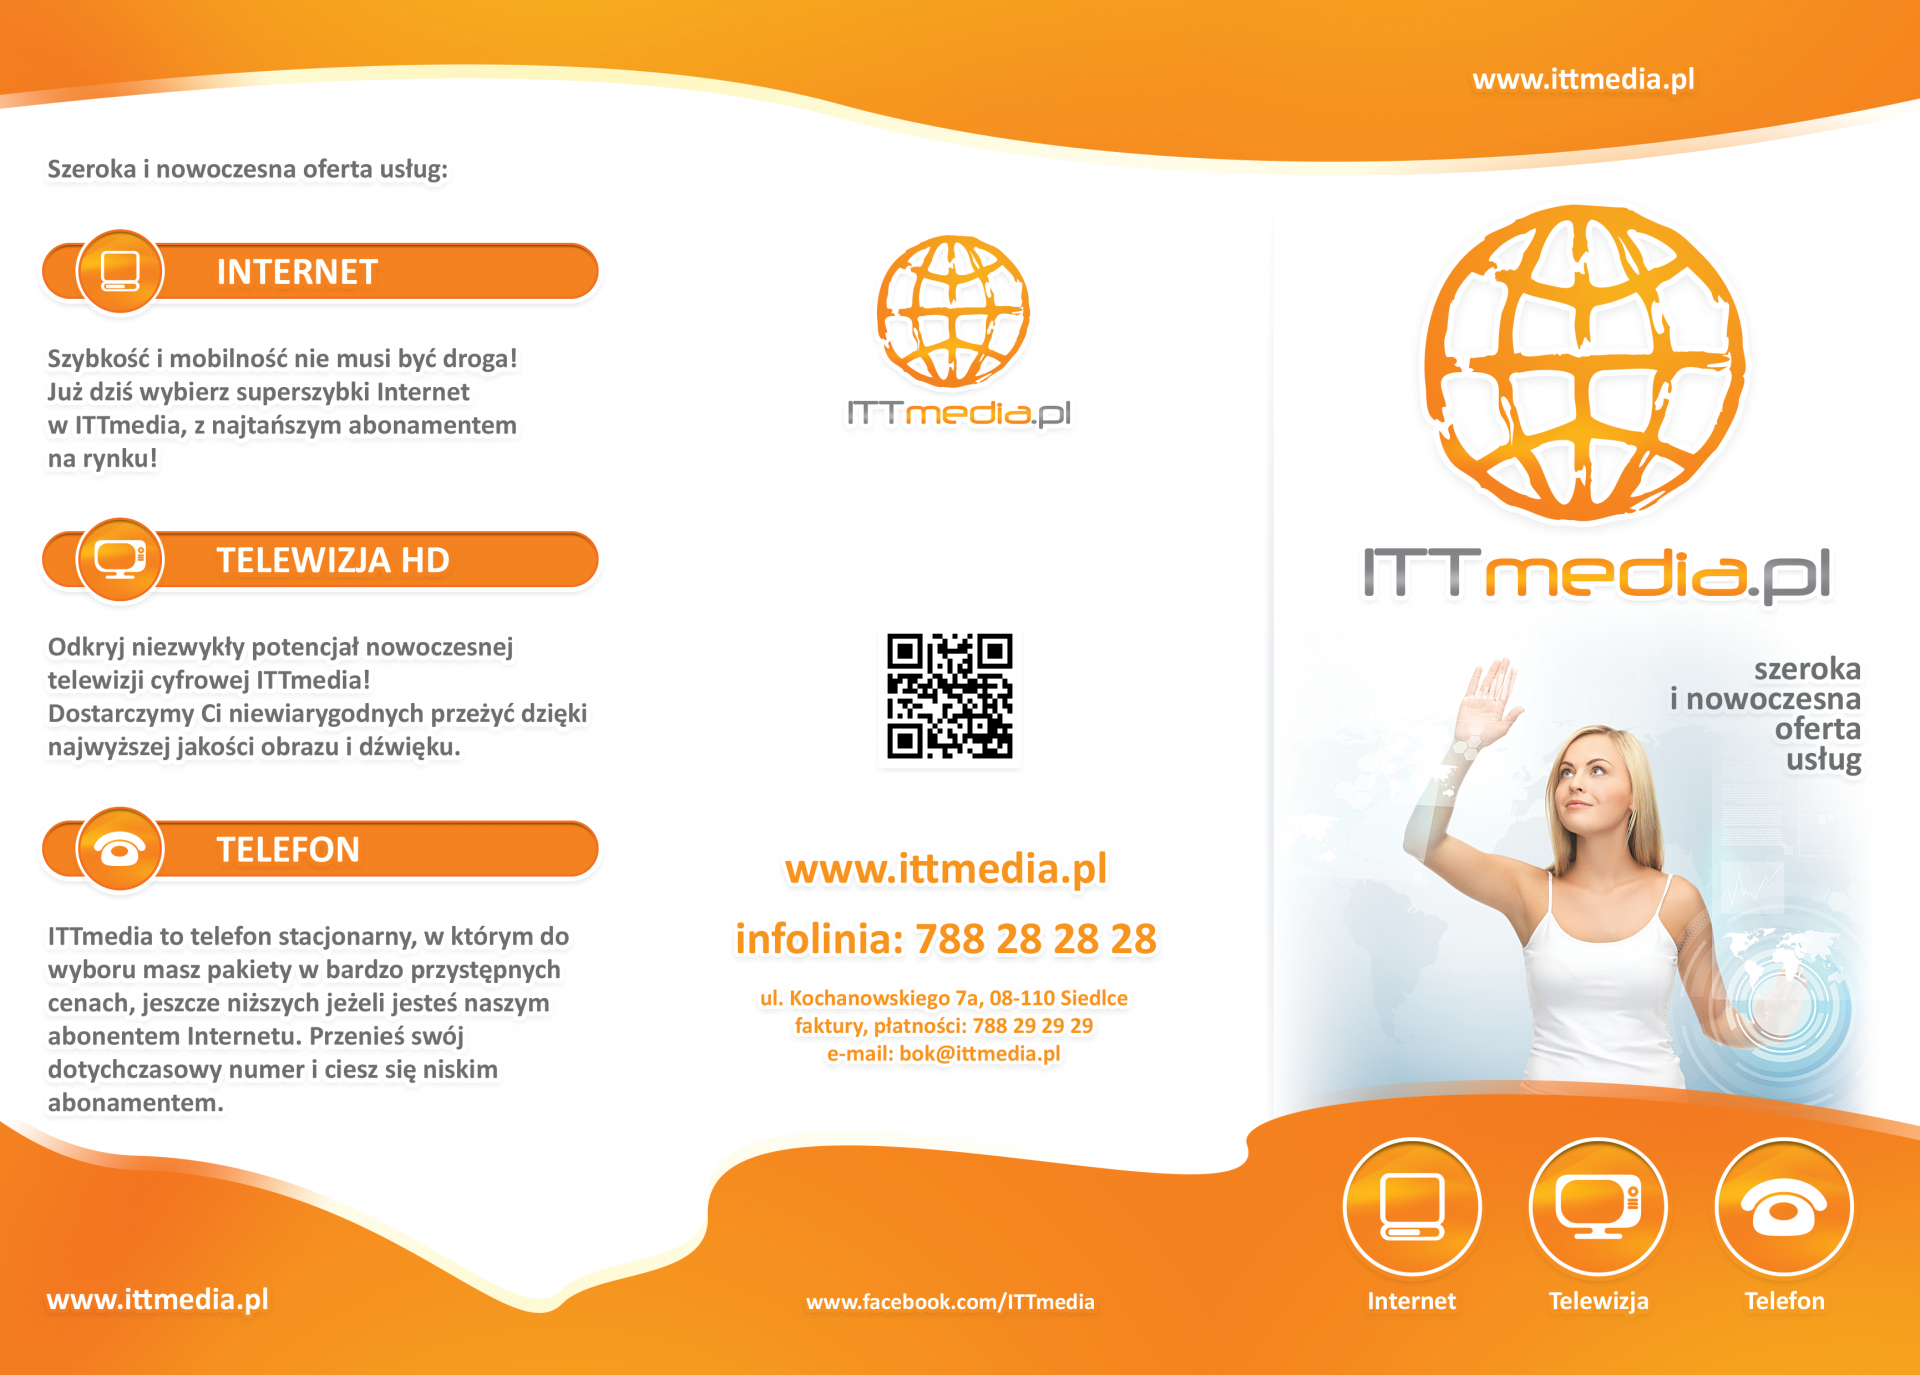 ITTmedia - 3xDL flyer. Outside.